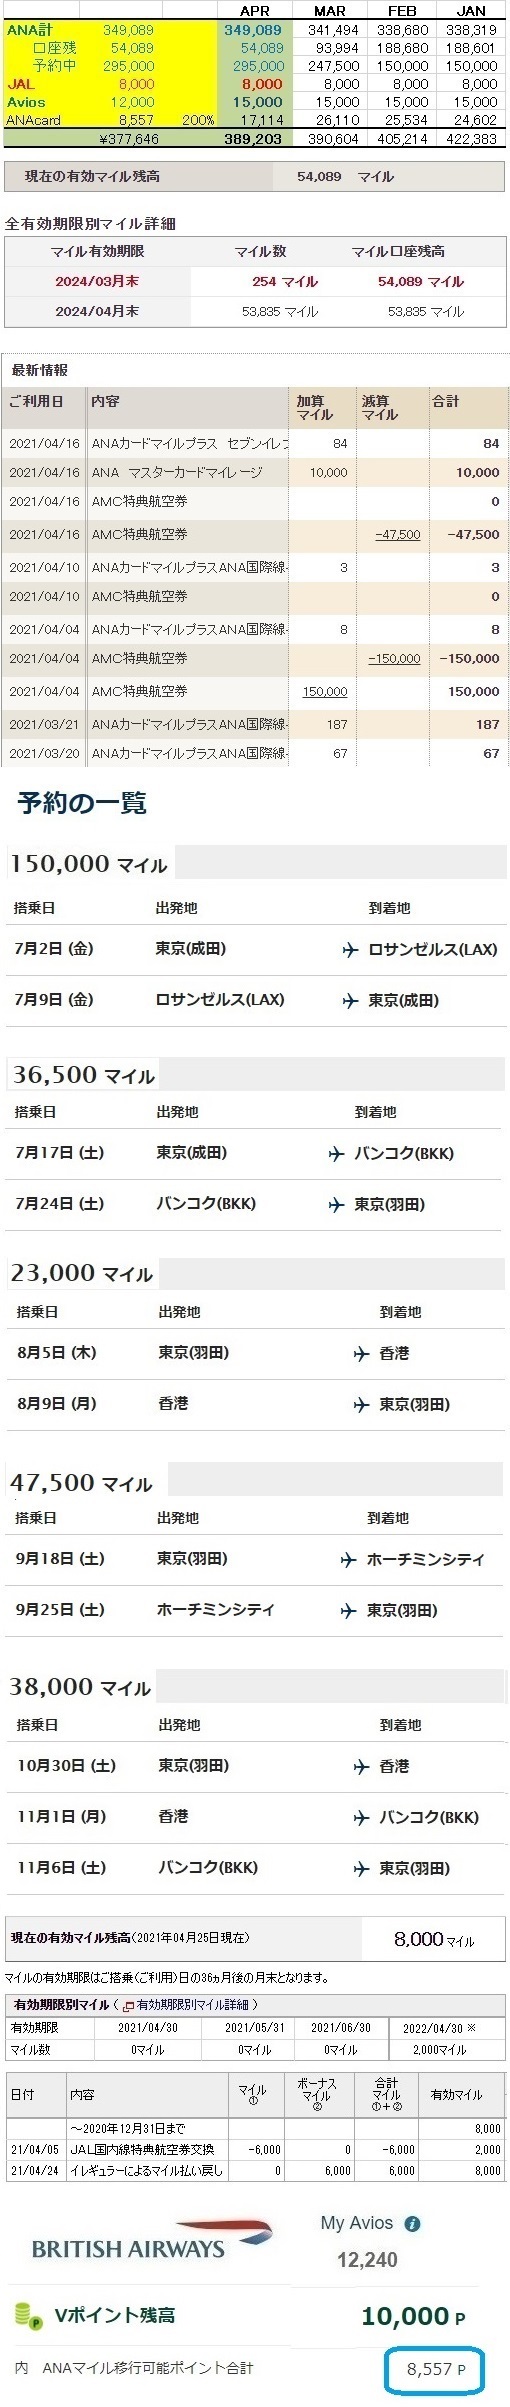 【ANAマイル】 累計獲得936,589M→587,500M搭乗